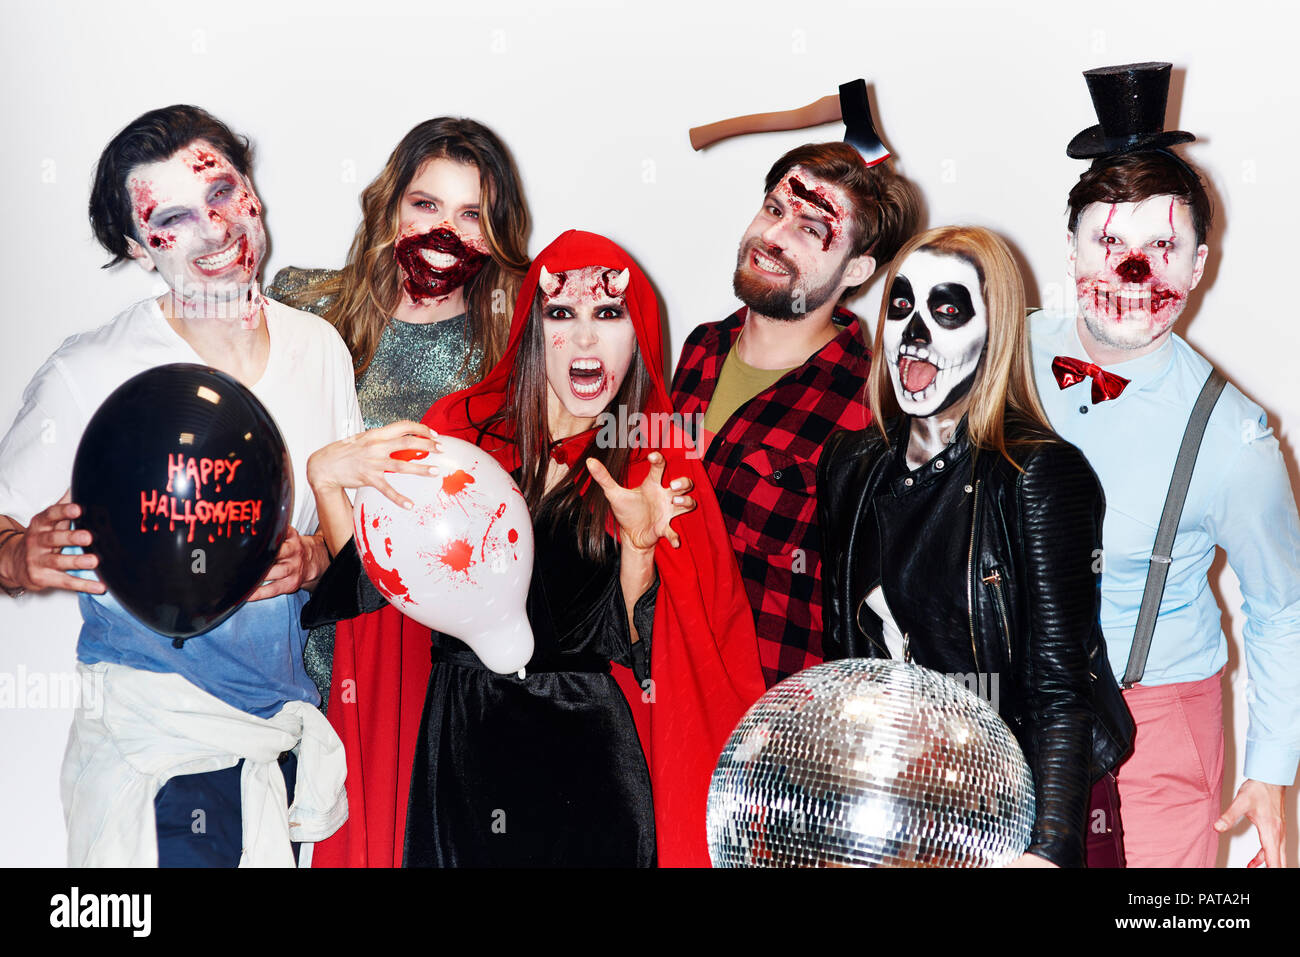 Freunde in gruselige Halloween Kostüme, Porträt Stockfotografie - Alamy